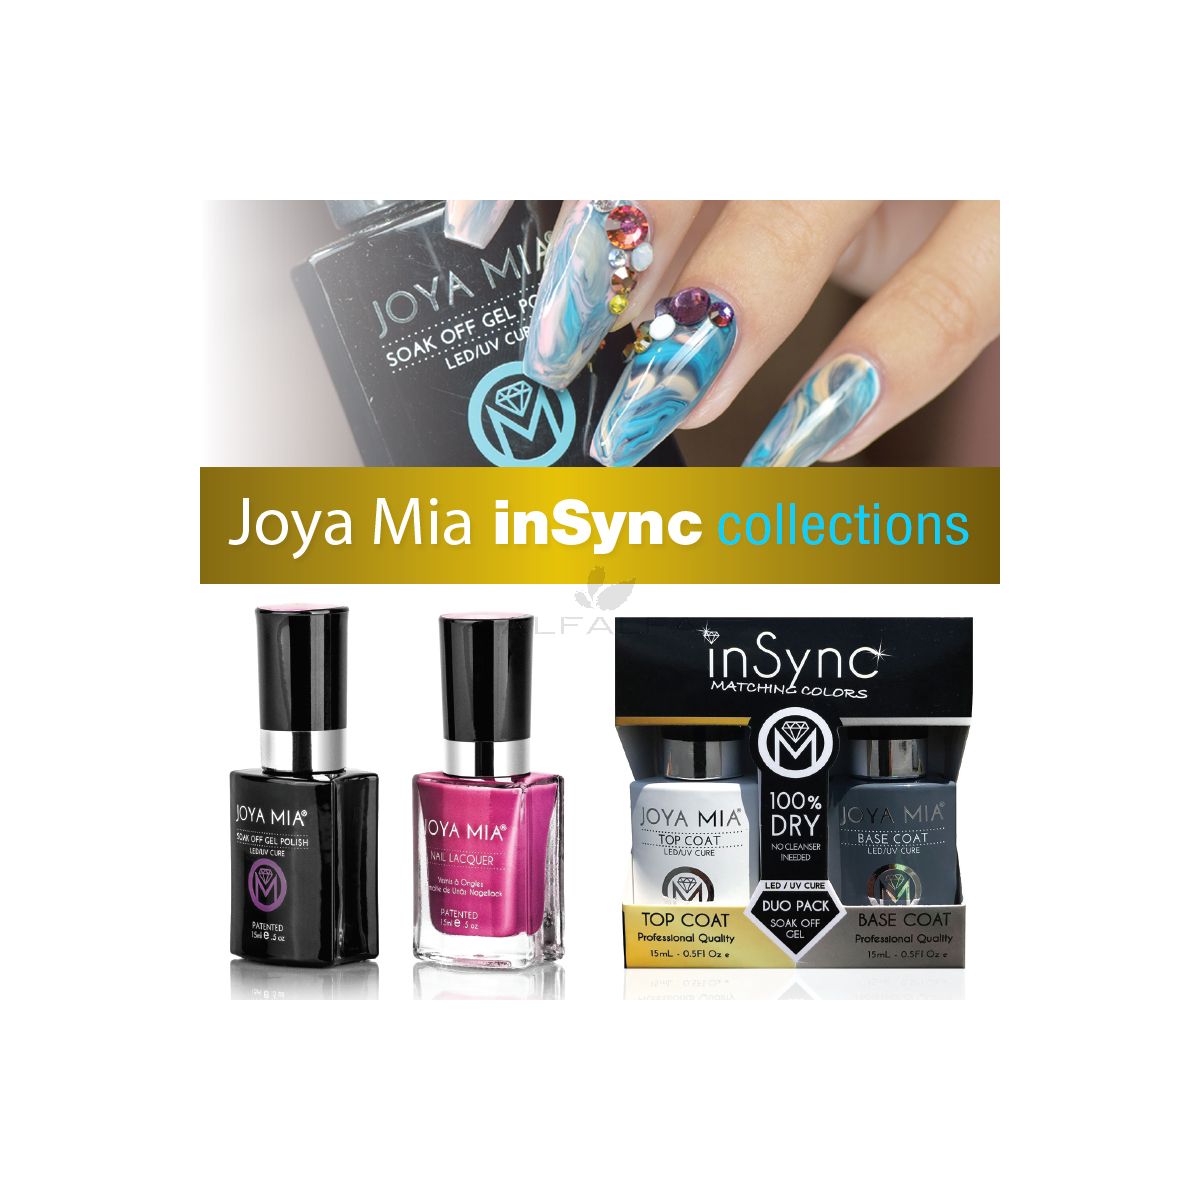 Joya Mia inSync - All color collections